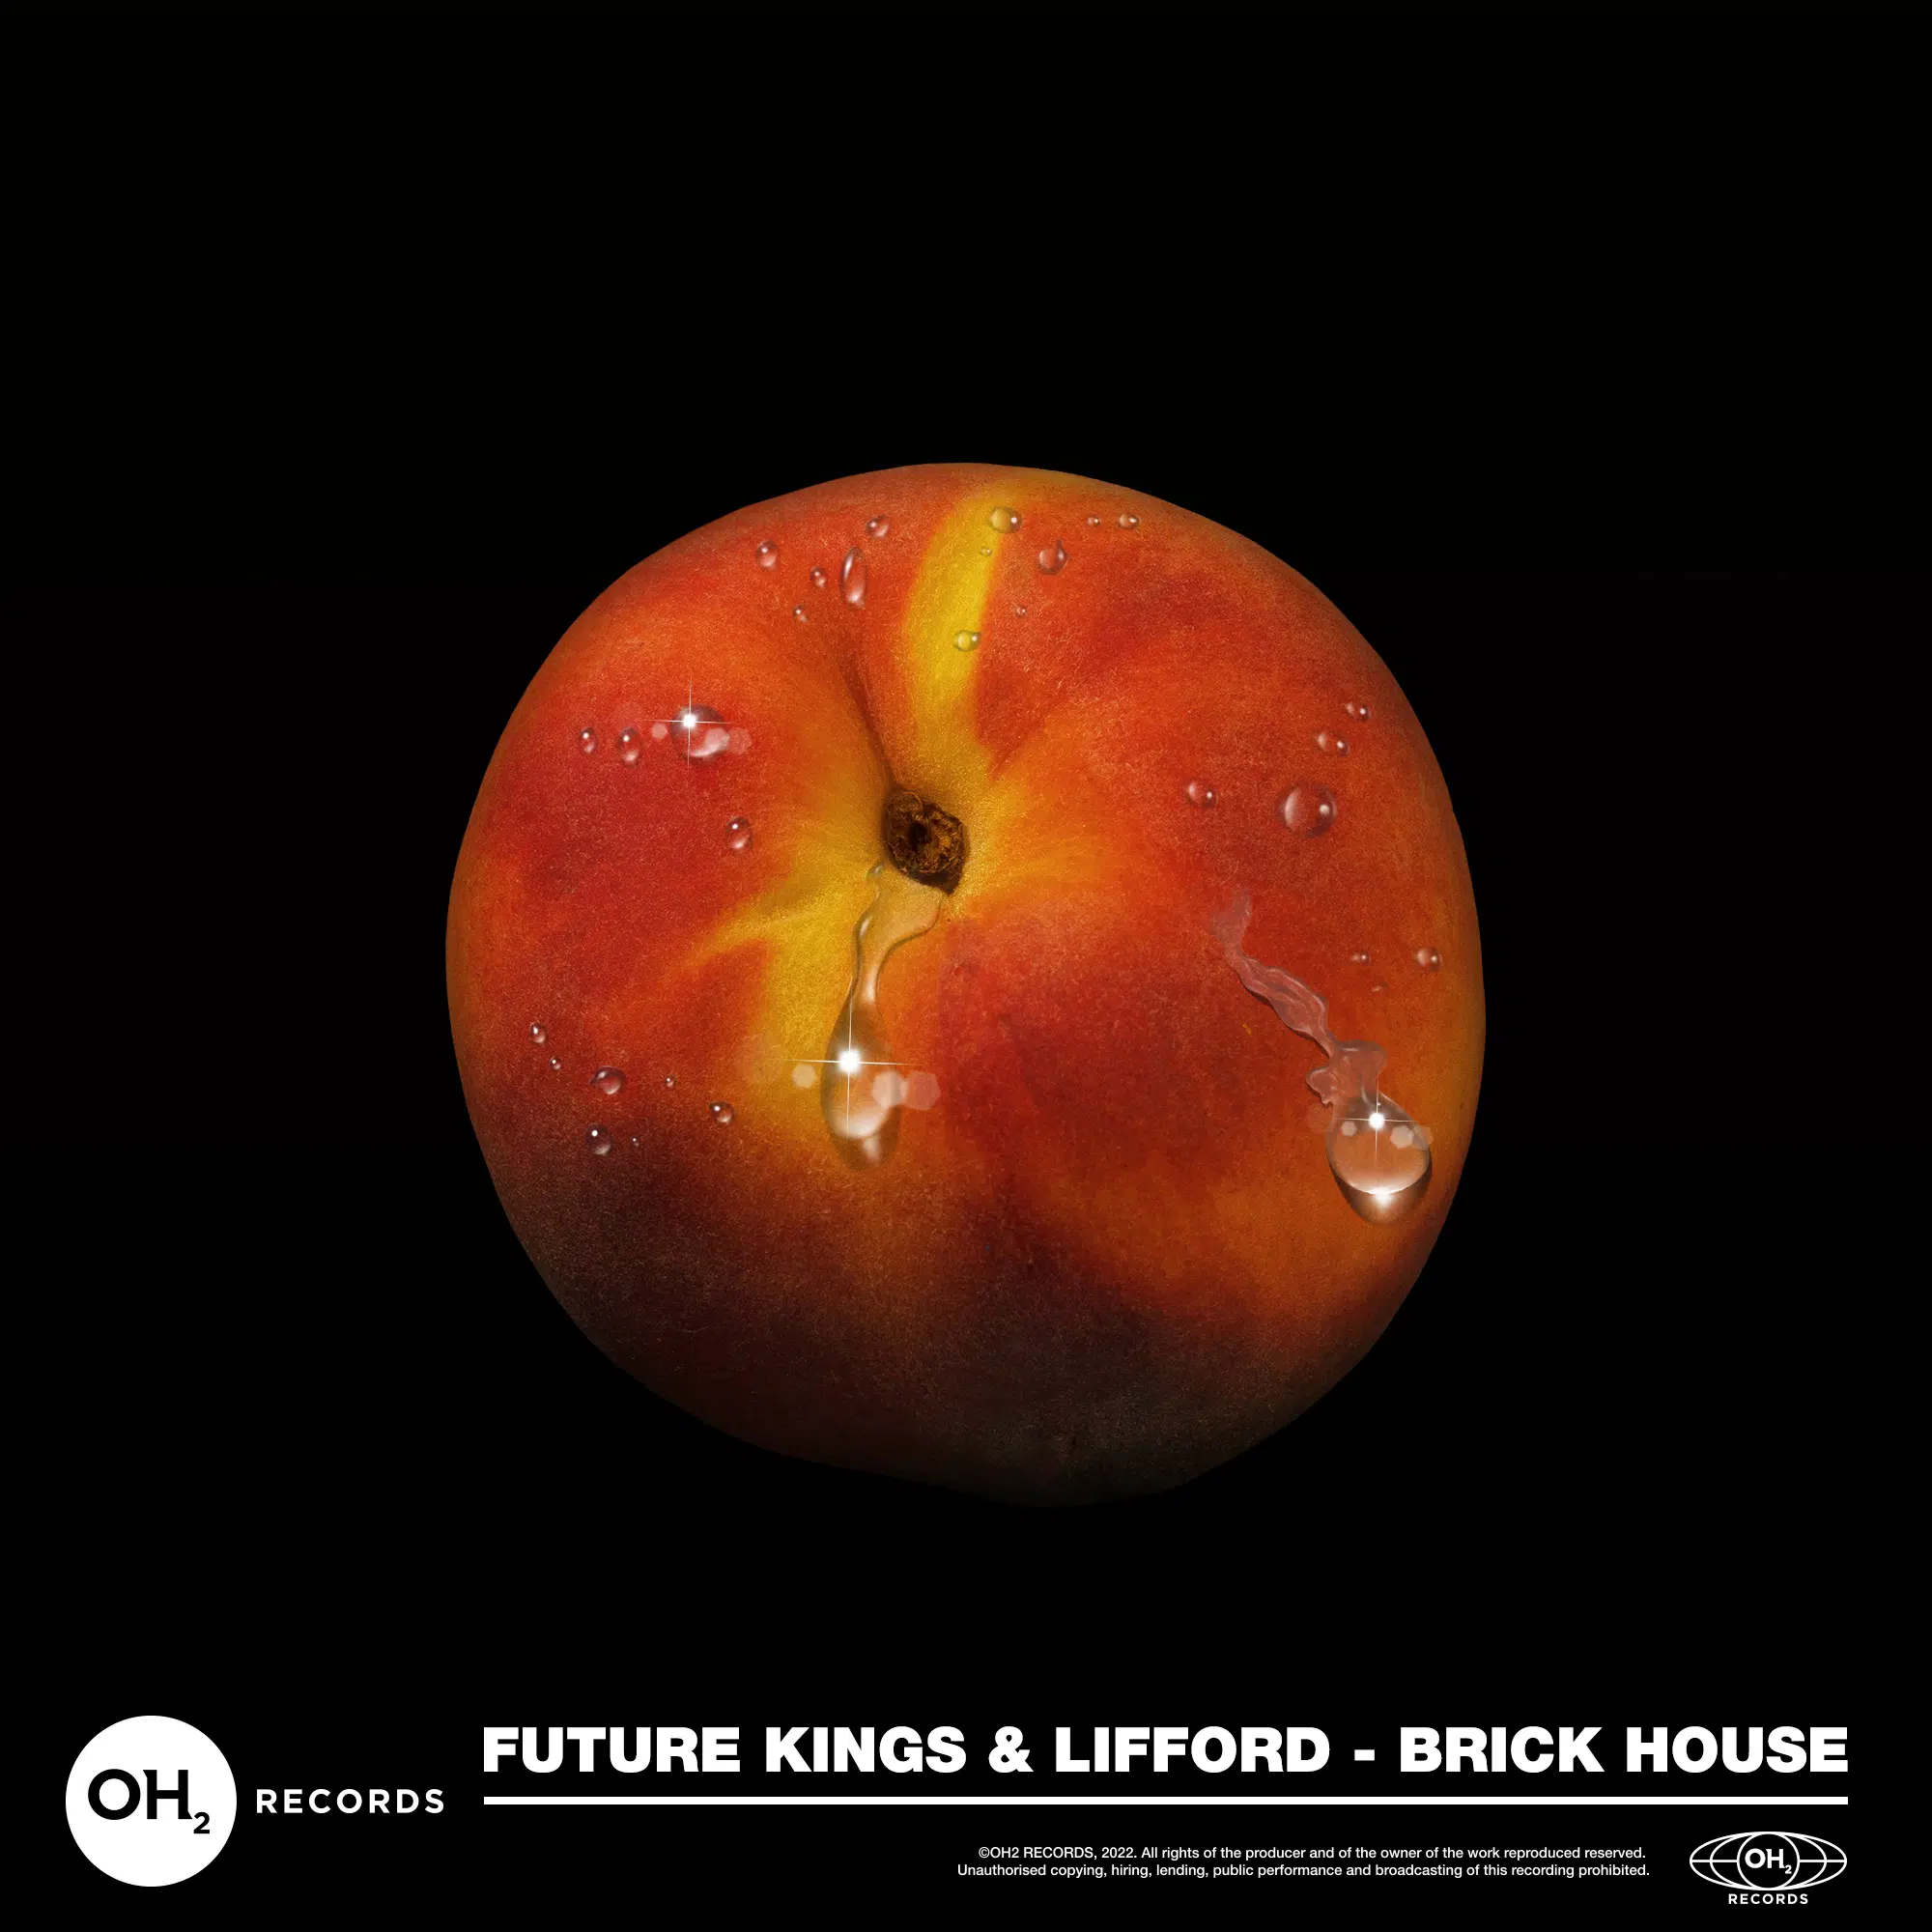 Future Kings & Lifford “Brick House”